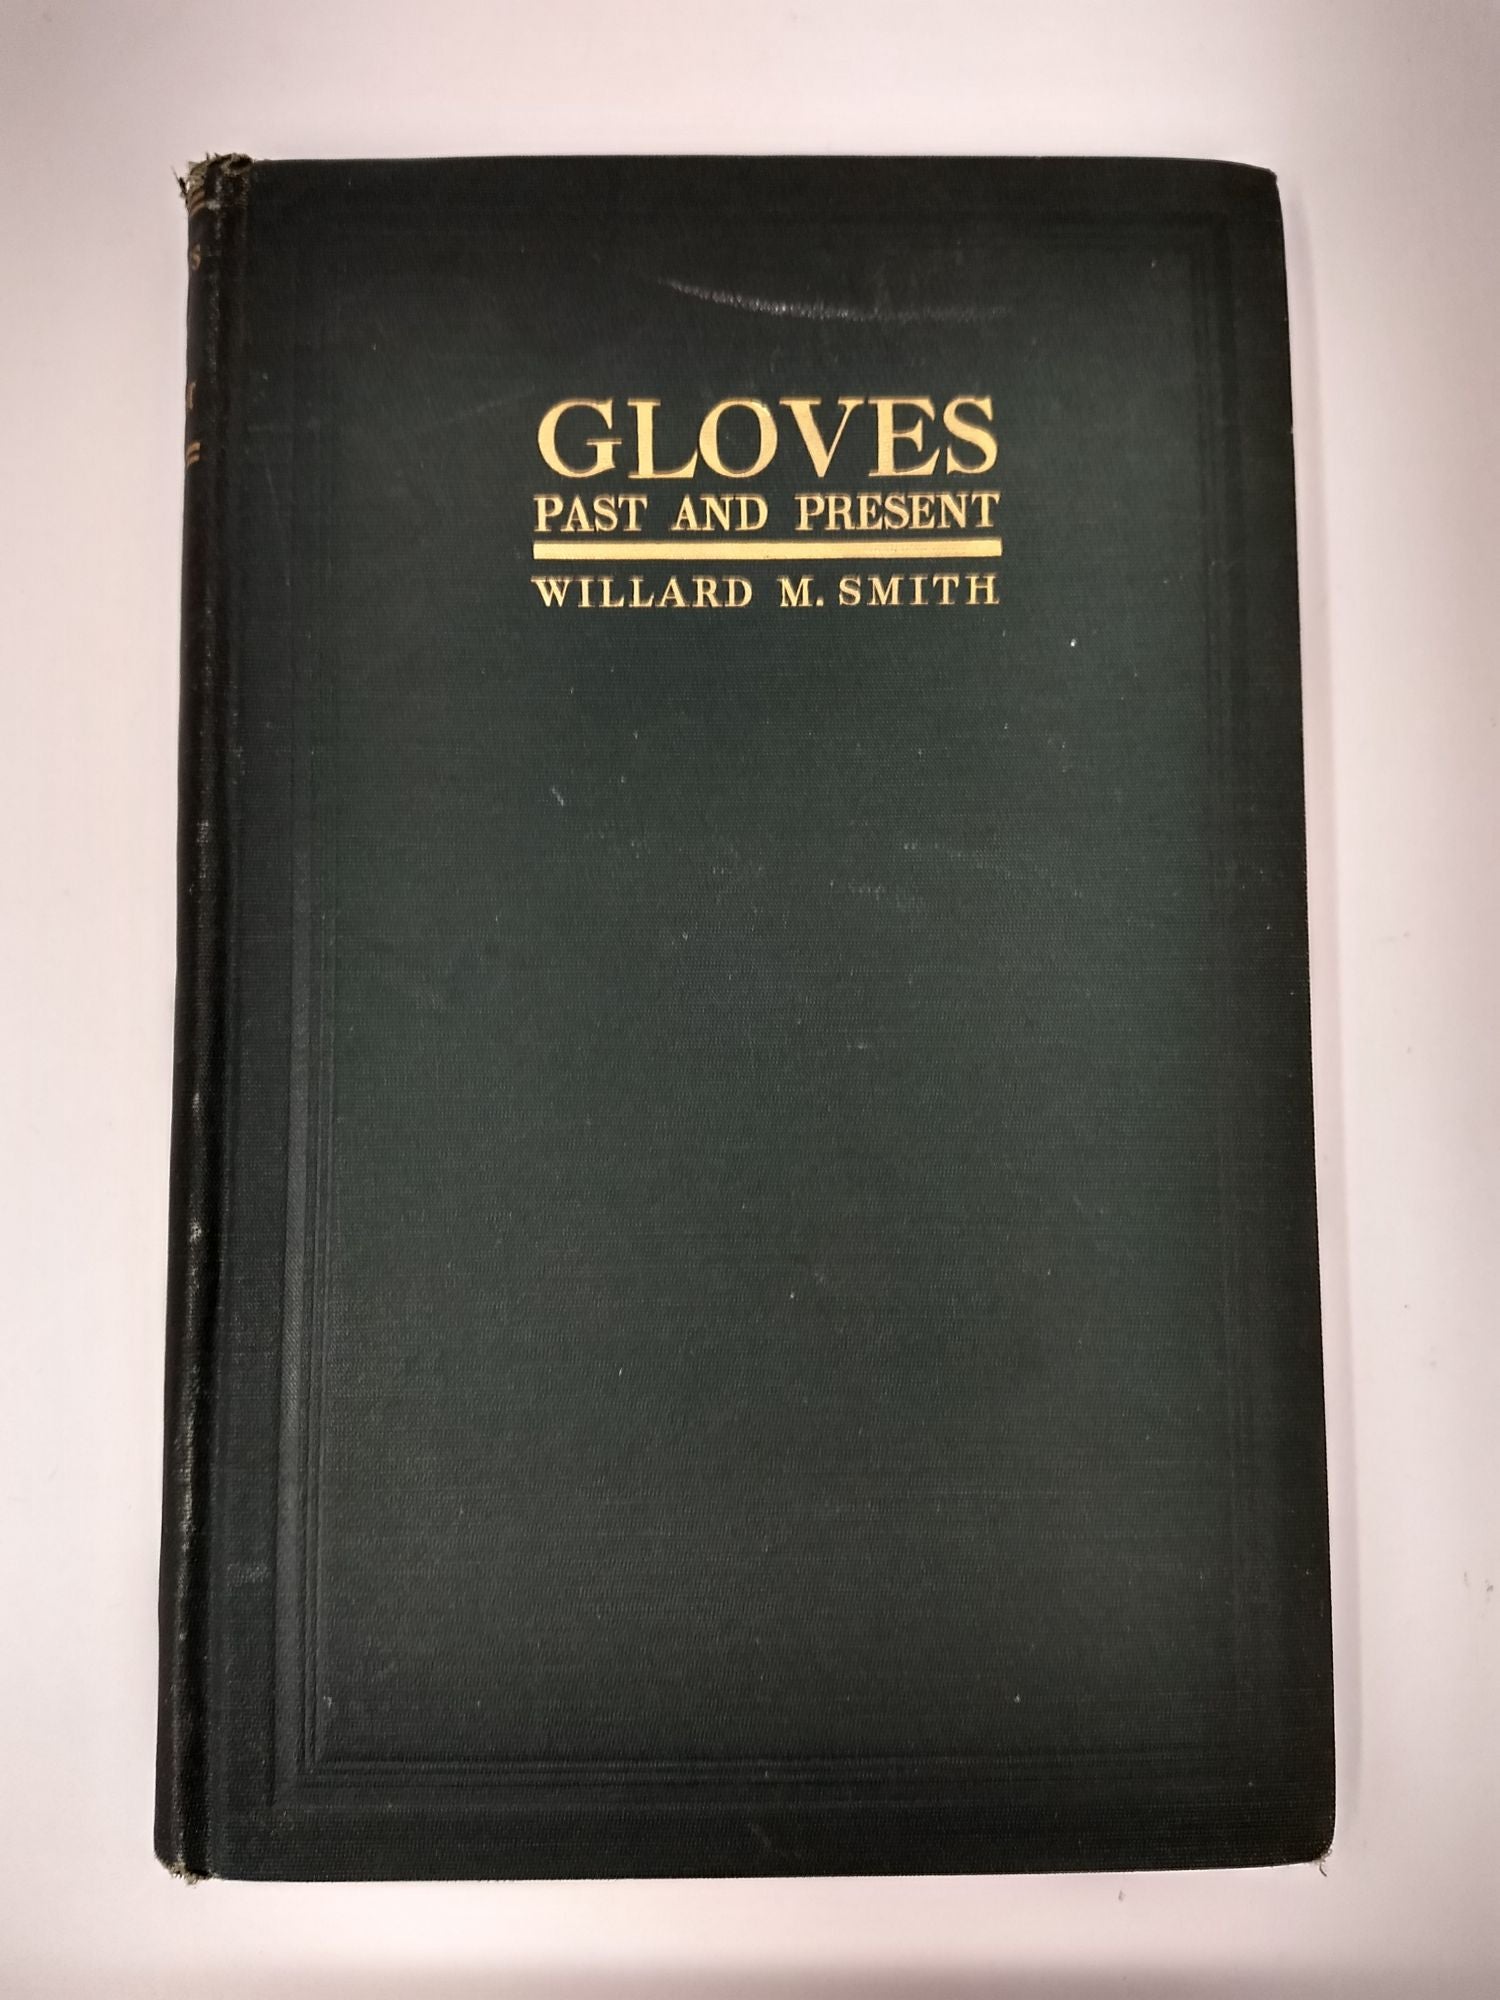 Smith, Willard M. - Gloves Past and Present